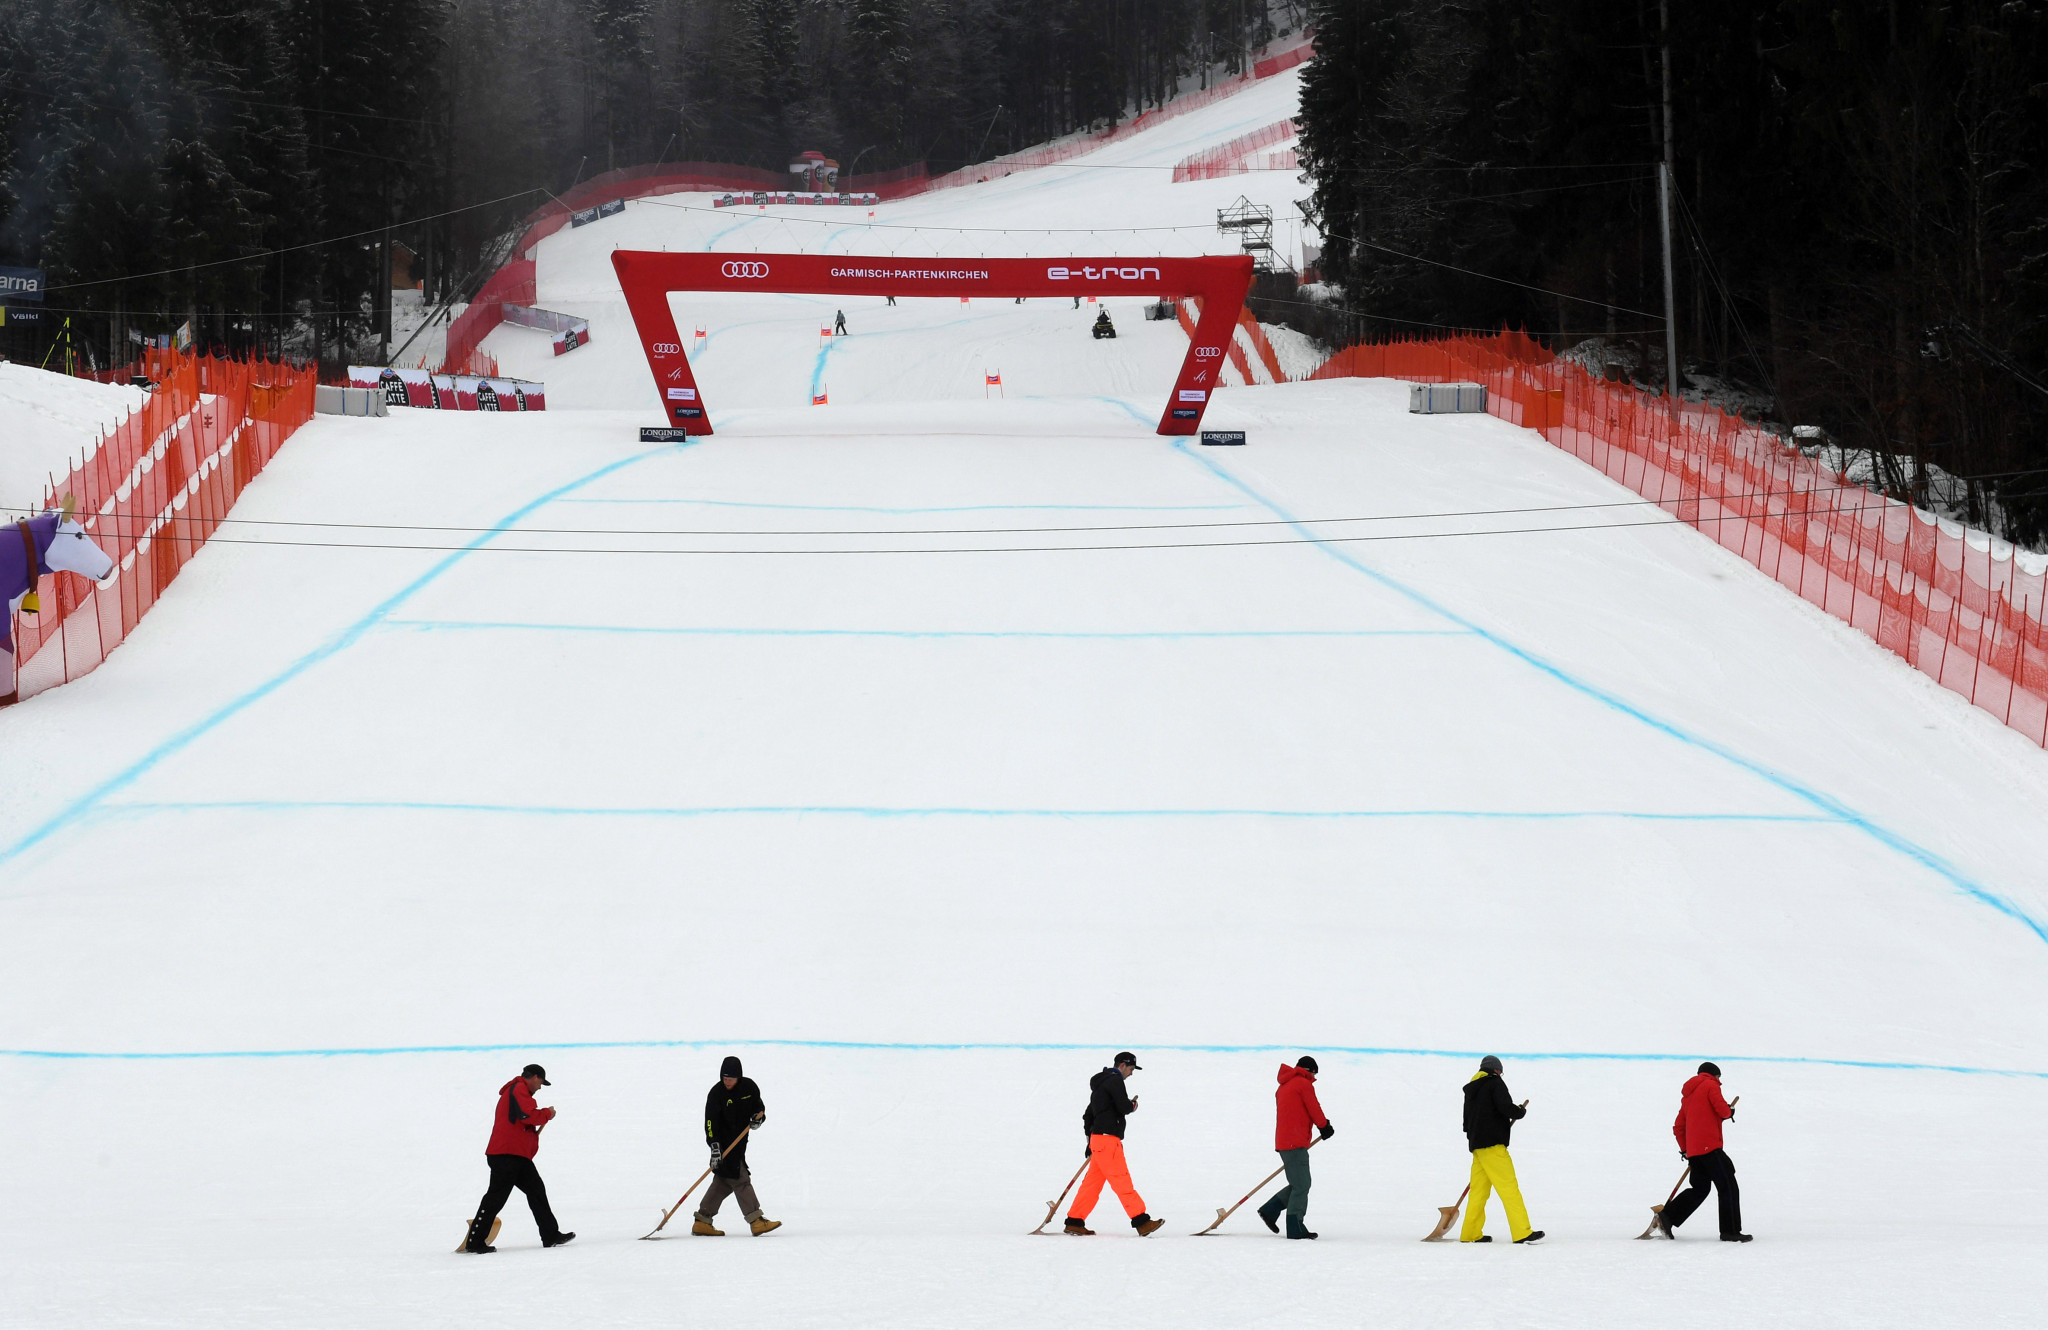 Garmisch-Partenkirchen is one of three candidates vying to host the 2025 Alpine World Ski Championships ©Getty Images